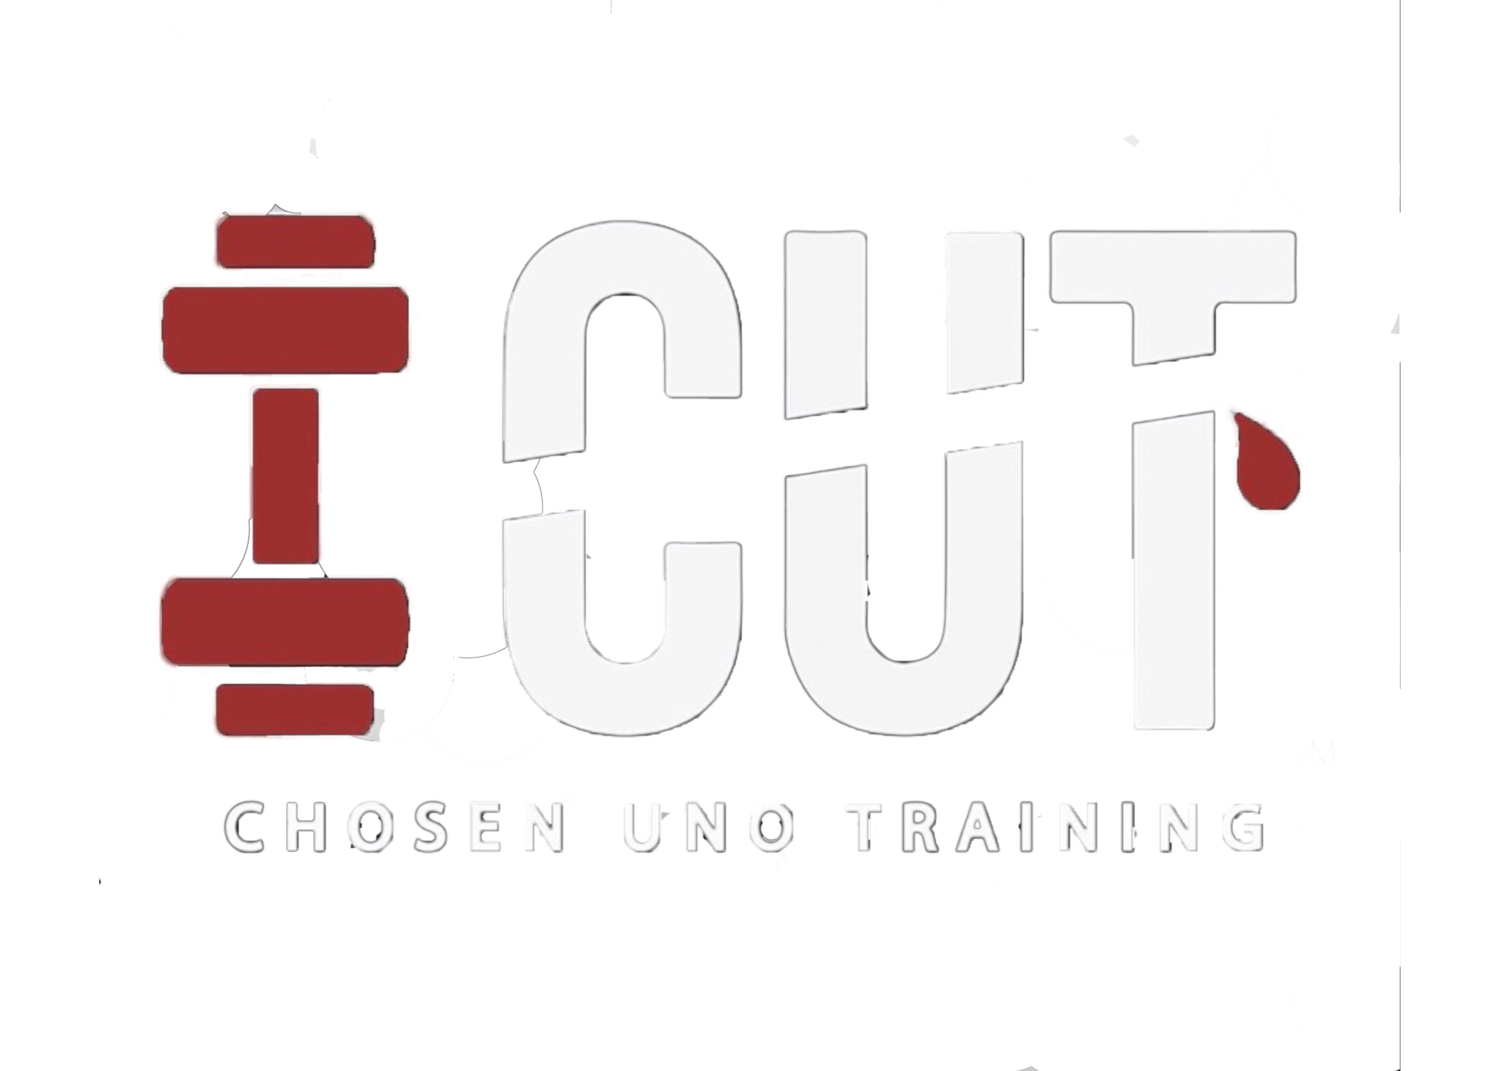 Chosen Uno Training